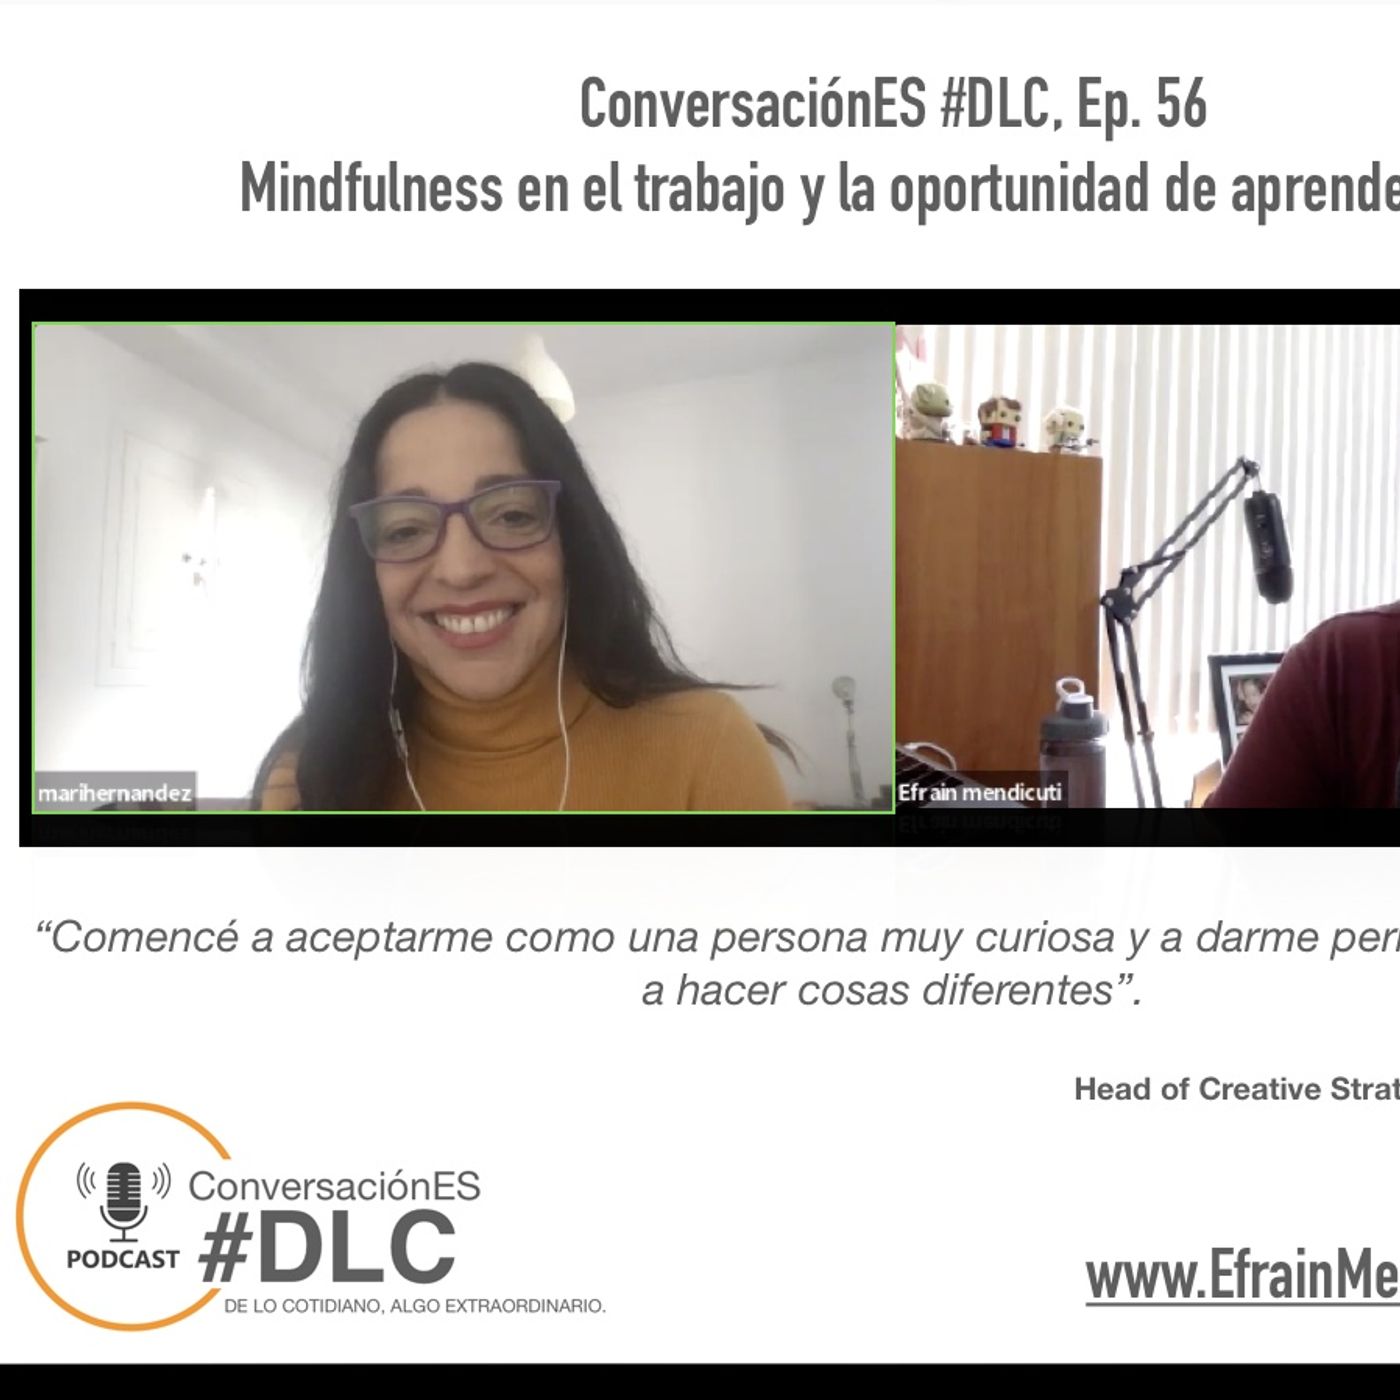 Episodio 56 - ConversaciónES #DLC con Mariana Hernández